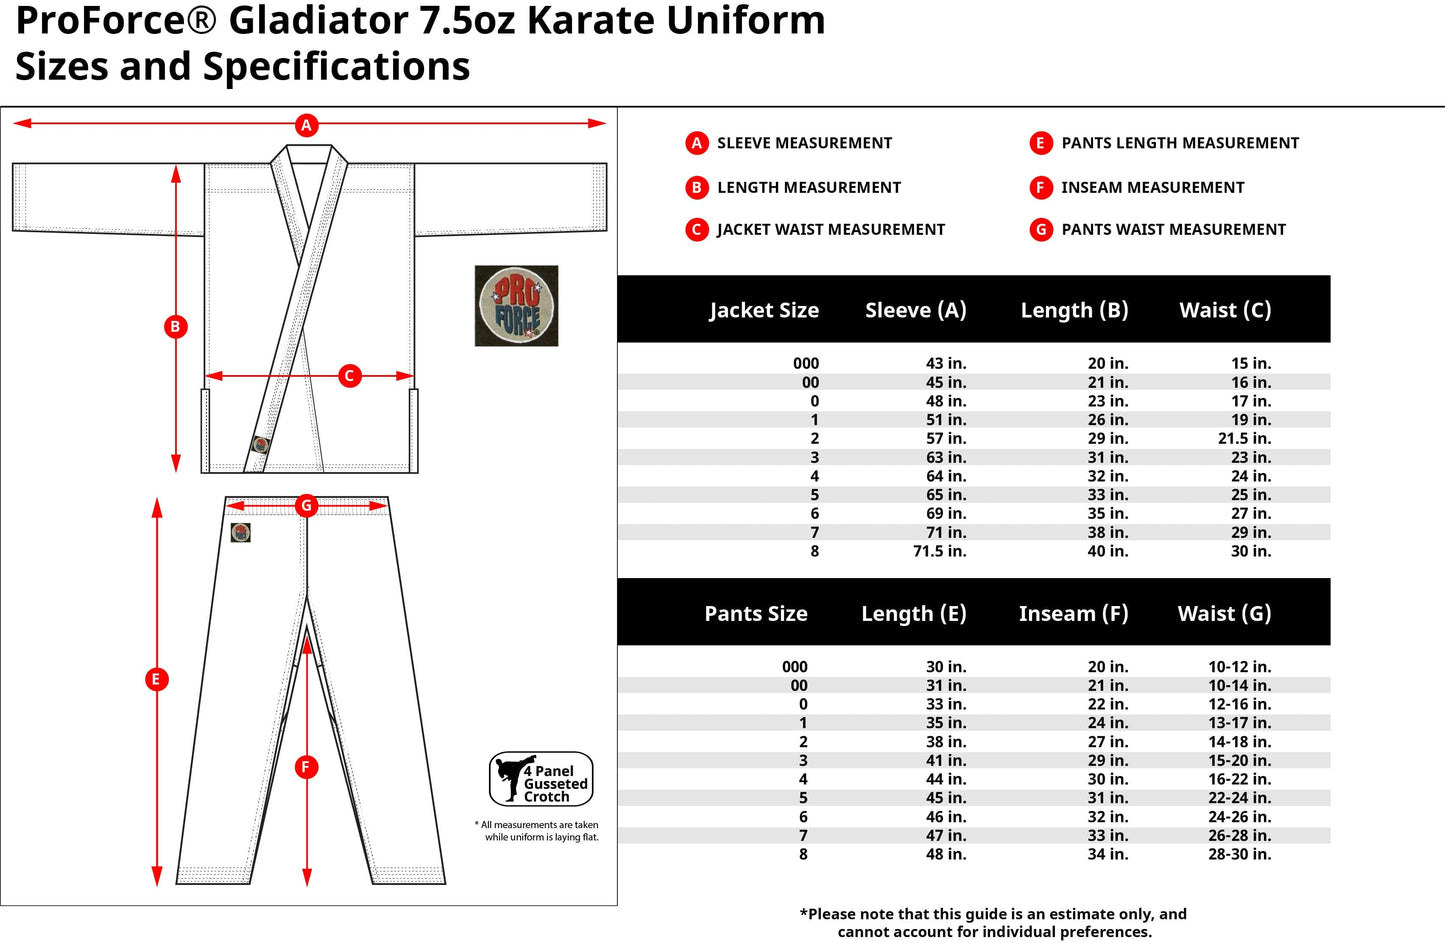 ProForce Karate Uniform ProForce Gladiator 7.5 oz Karate Uniform Elastic Drawstring Pants - Blend Black